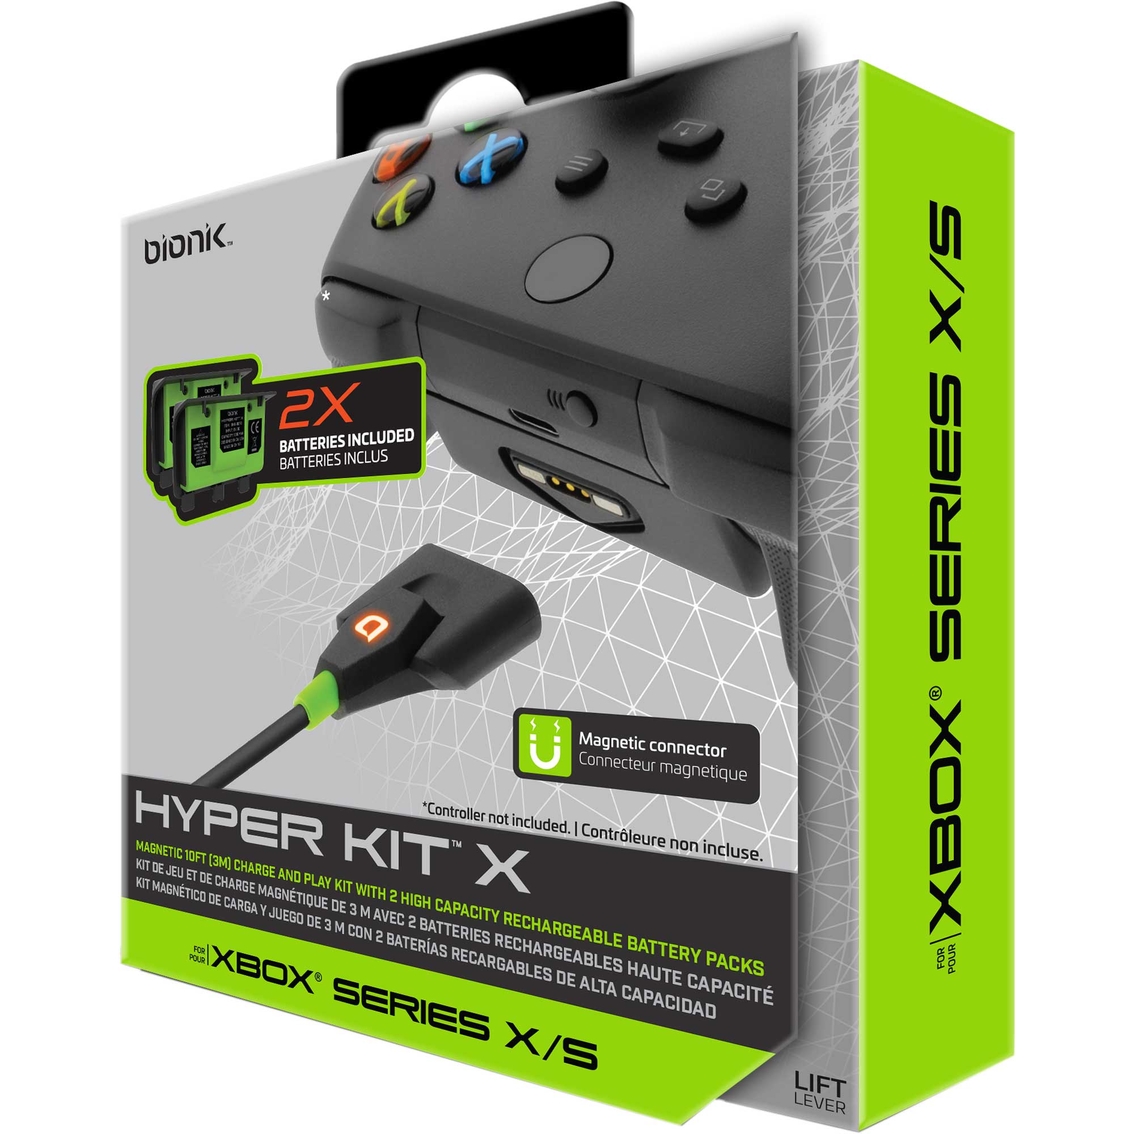 bionik Hyper Kit for Xbox Series S/X - Image 5 of 8